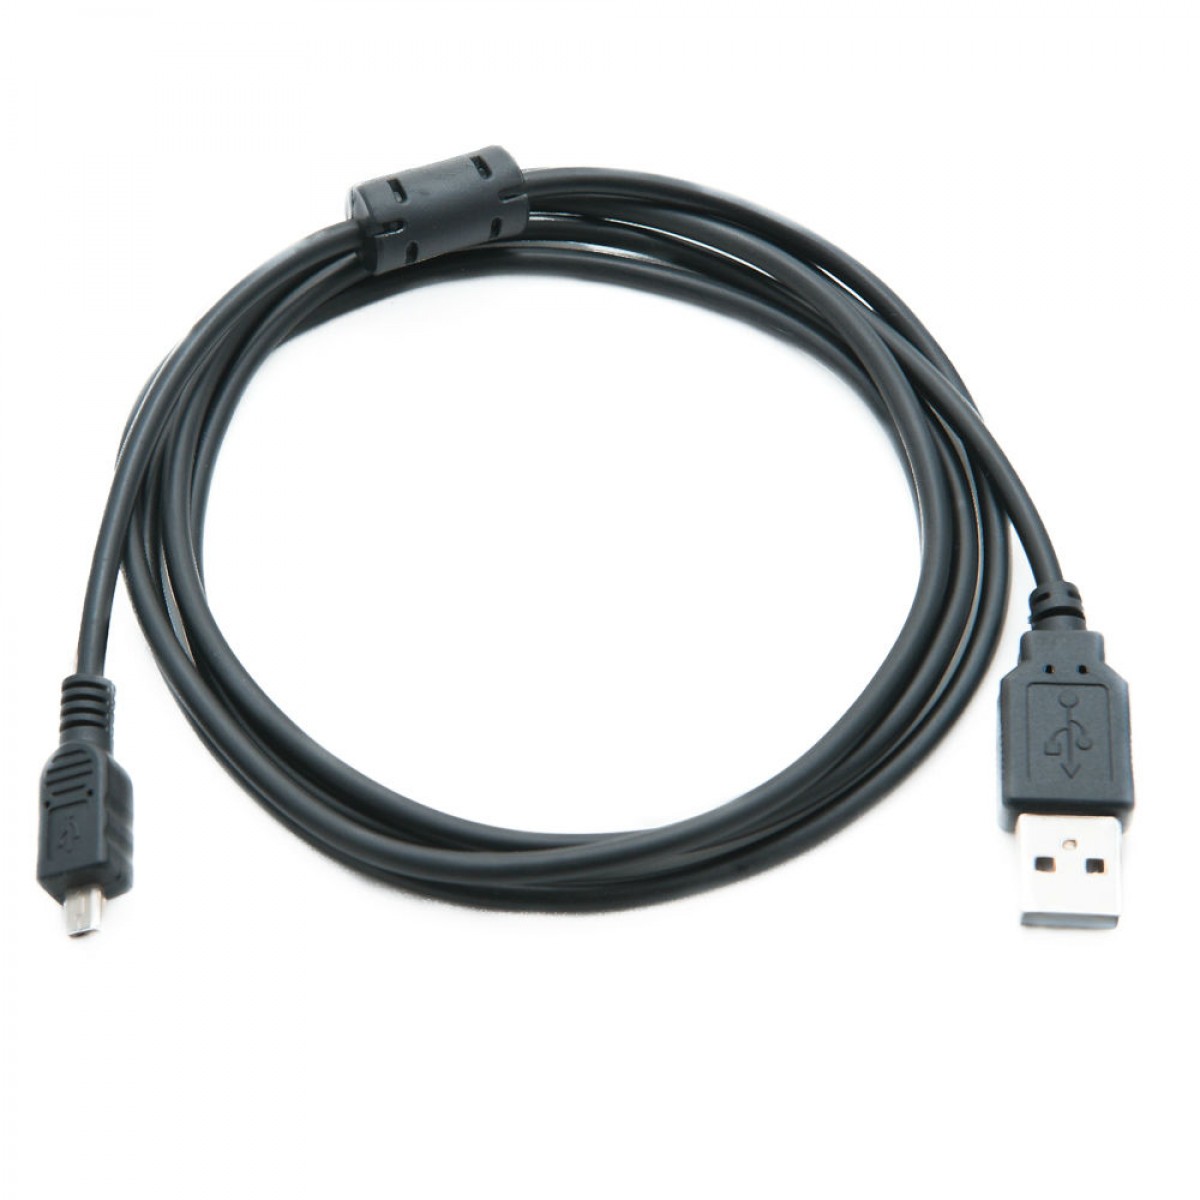 USB Cable De Datos para Fujifilm FinePix S9800,S9900,S9900W,XP80